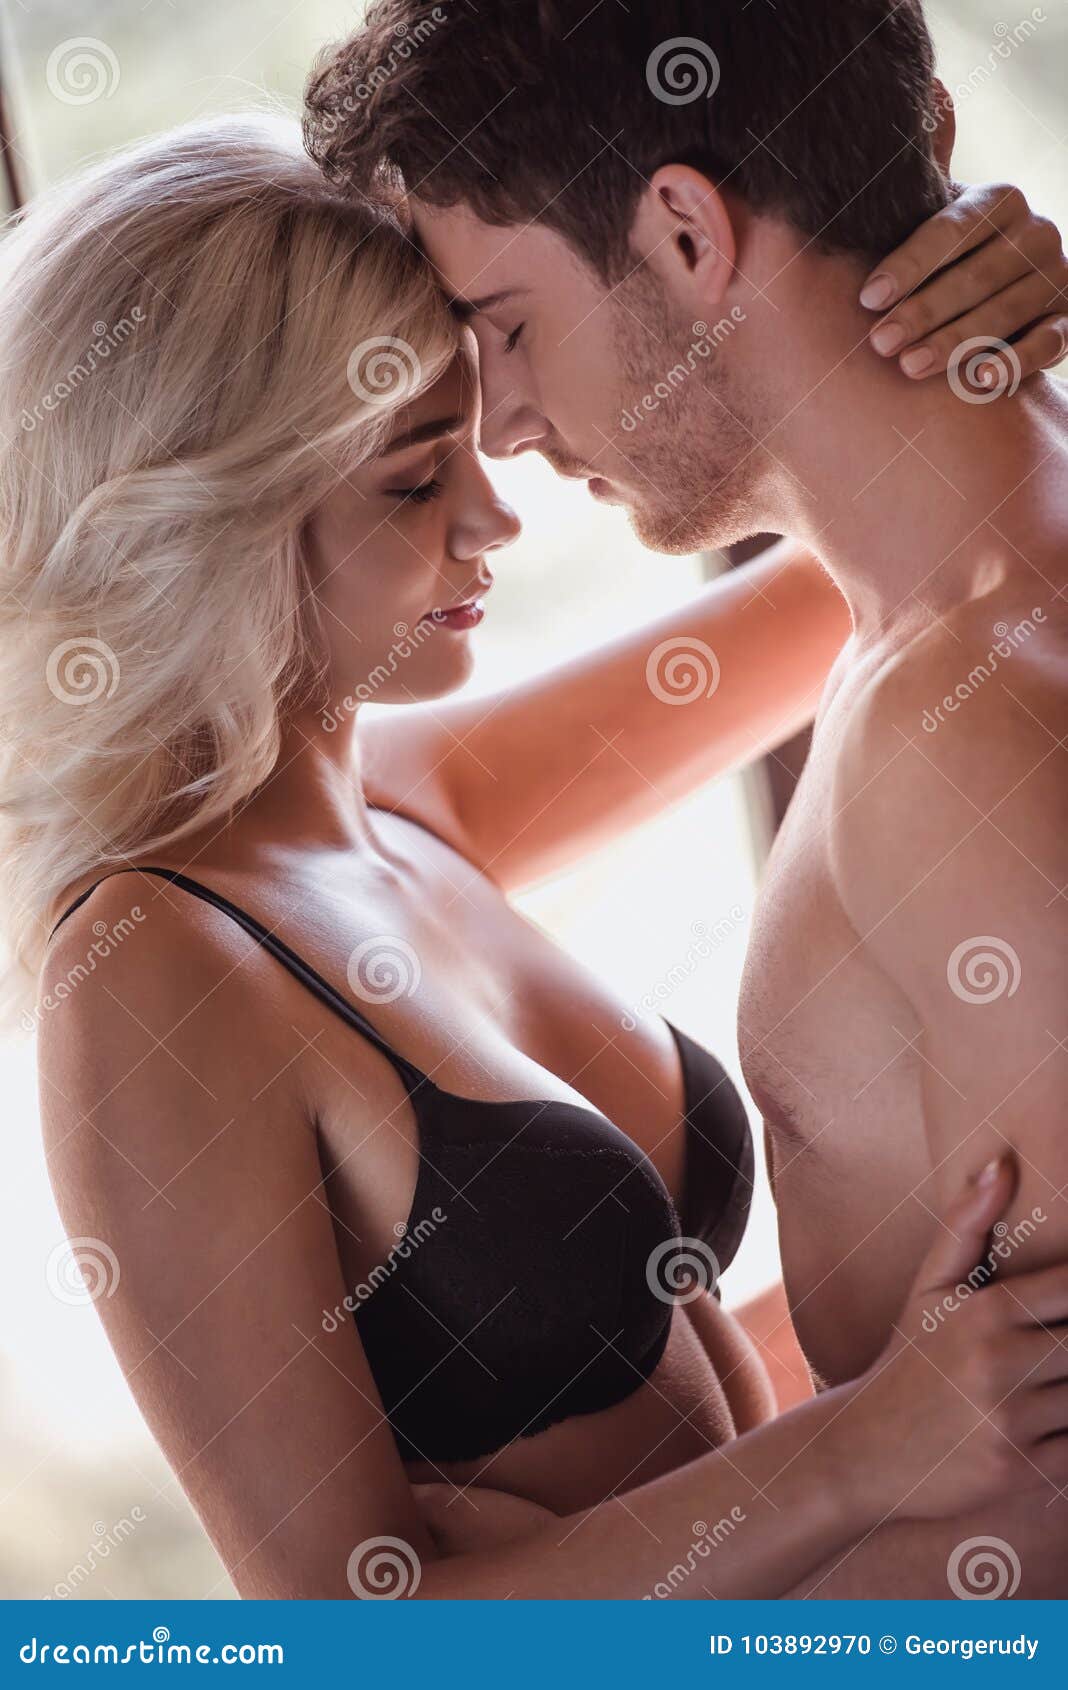 Couple having sex stock photo pic